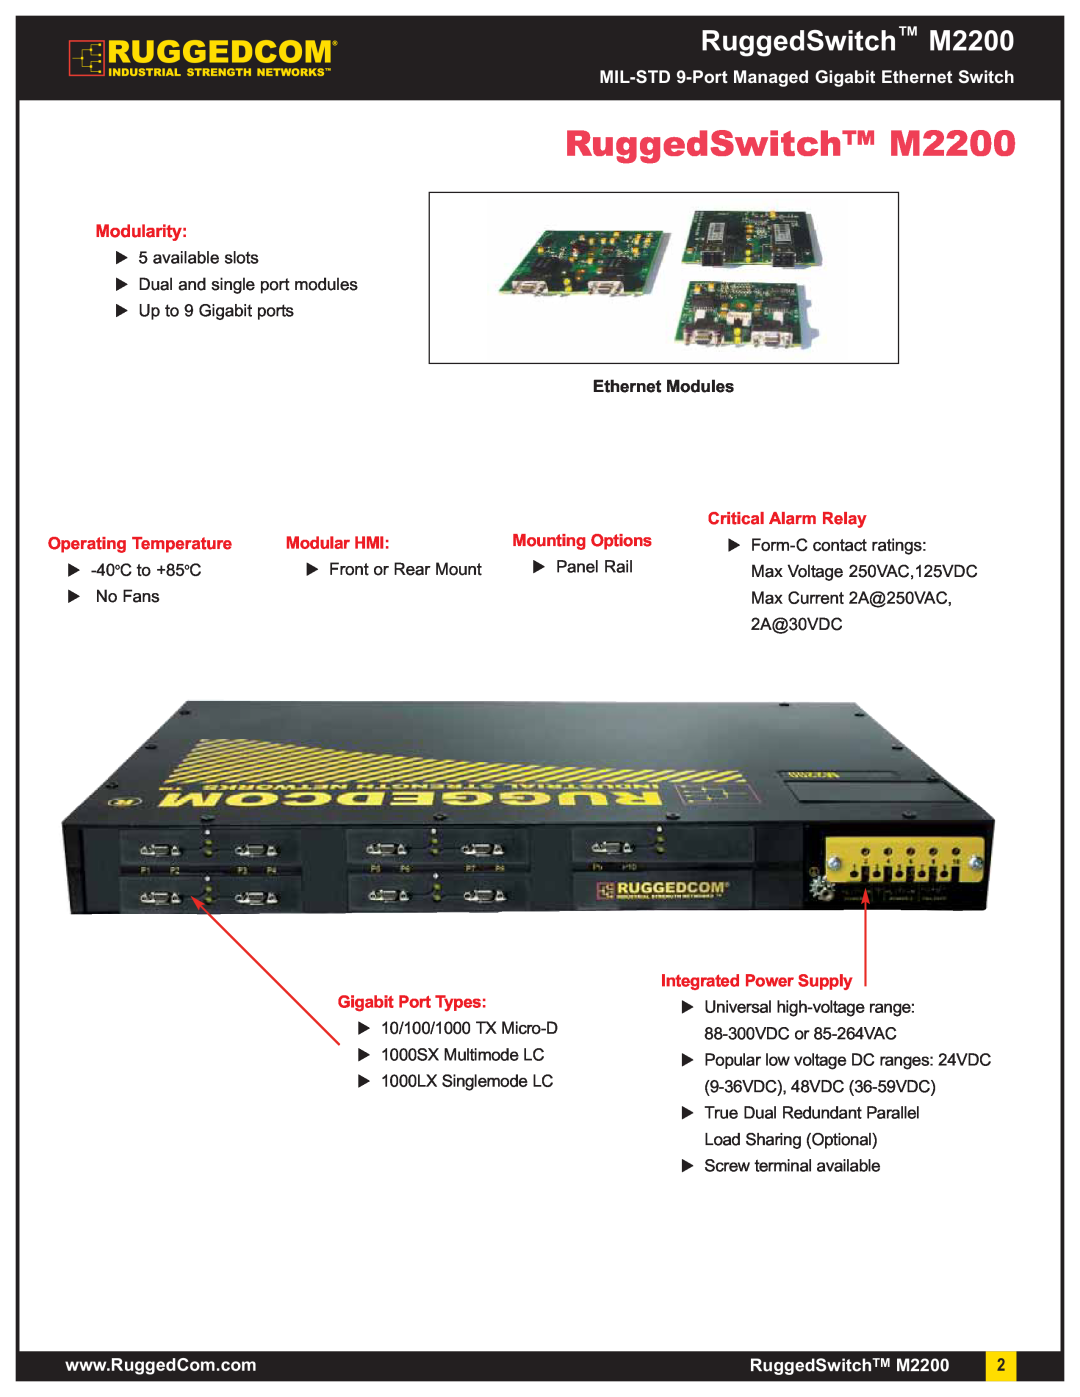 RuggedCom m2200 manual RuggedSwitch M2200, Ethernet Modules, MIL-STD 9-Port Managed Gigabit Ethernet Switch, Modularity 